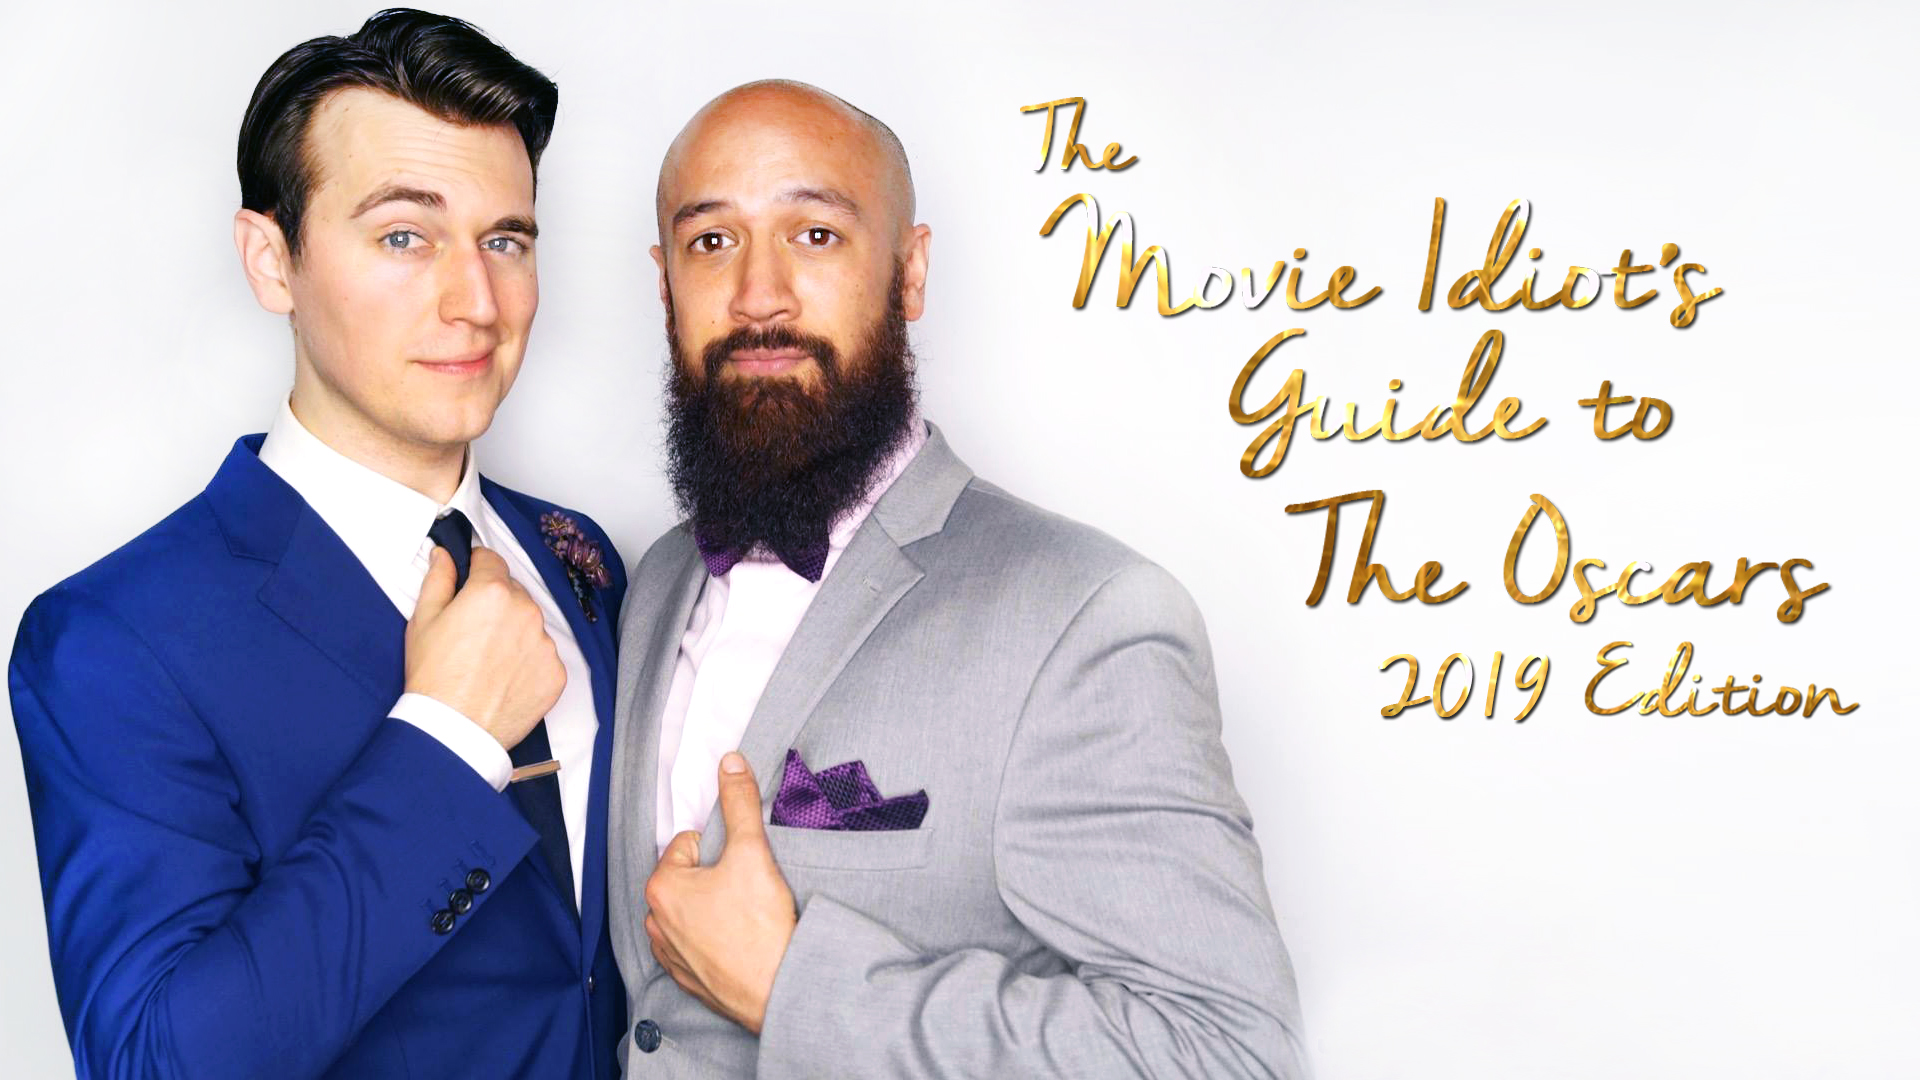 Jeff Ronan & Matt Bovee: "The Movie Idiot's Guide to the Oscars"